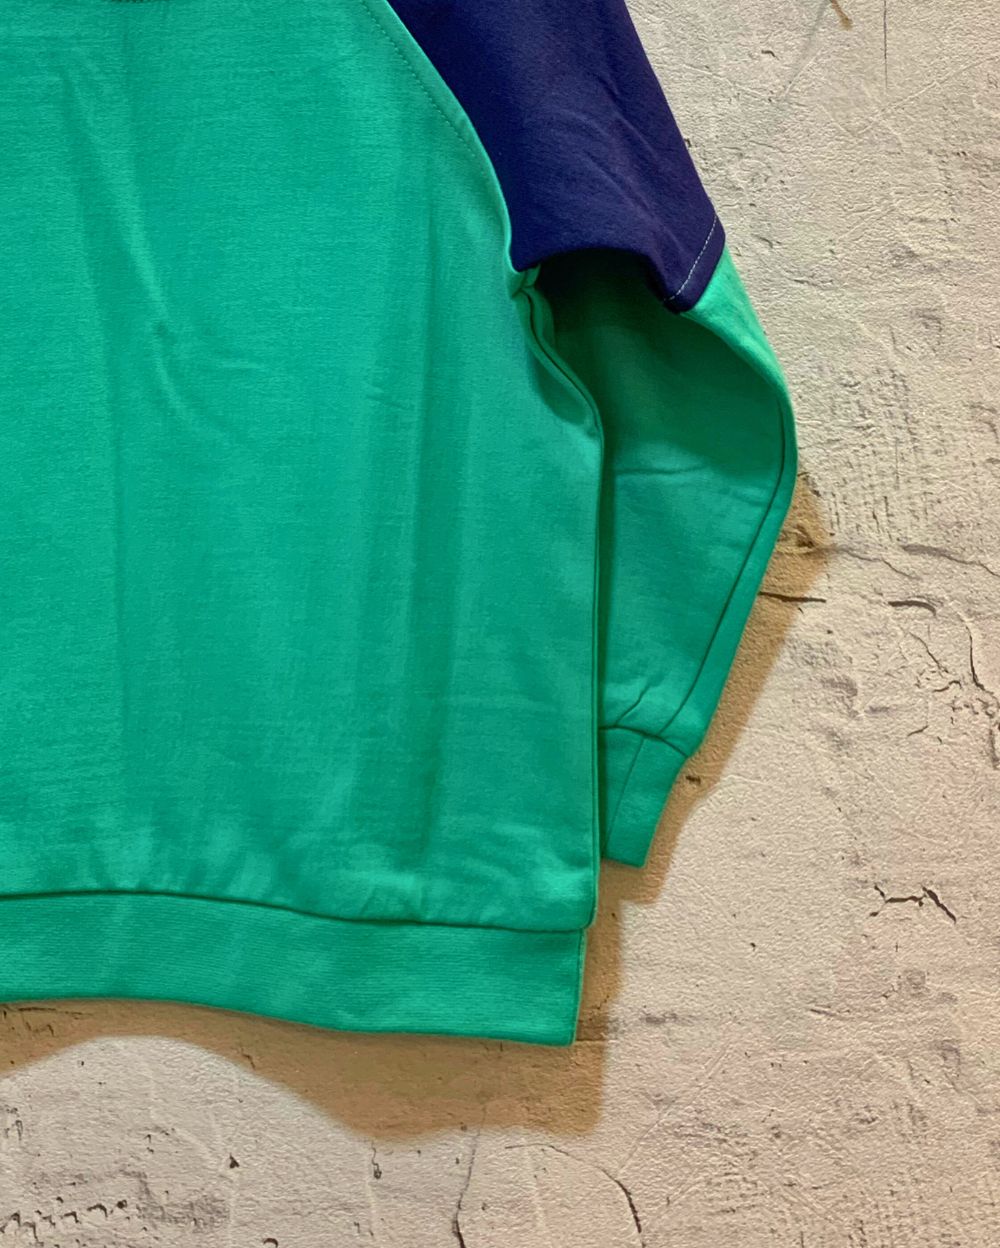 Baby-Kids 100% Cotton Sweatshirts – Set of 3